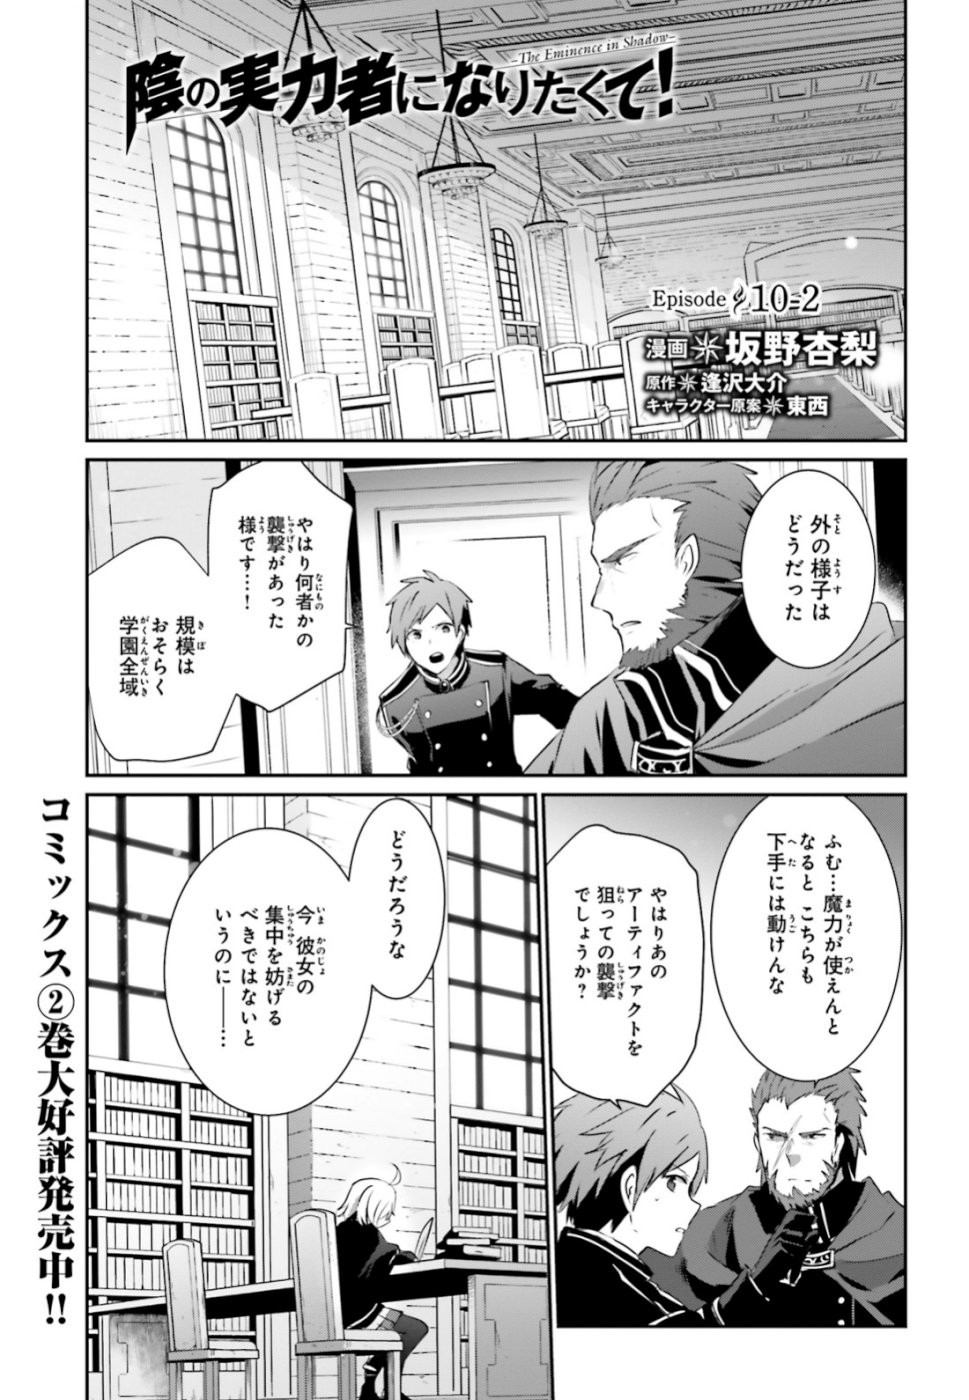 Kage no Jitsuryokusha ni Naritakute! - Chapter 10-2 - Page 1